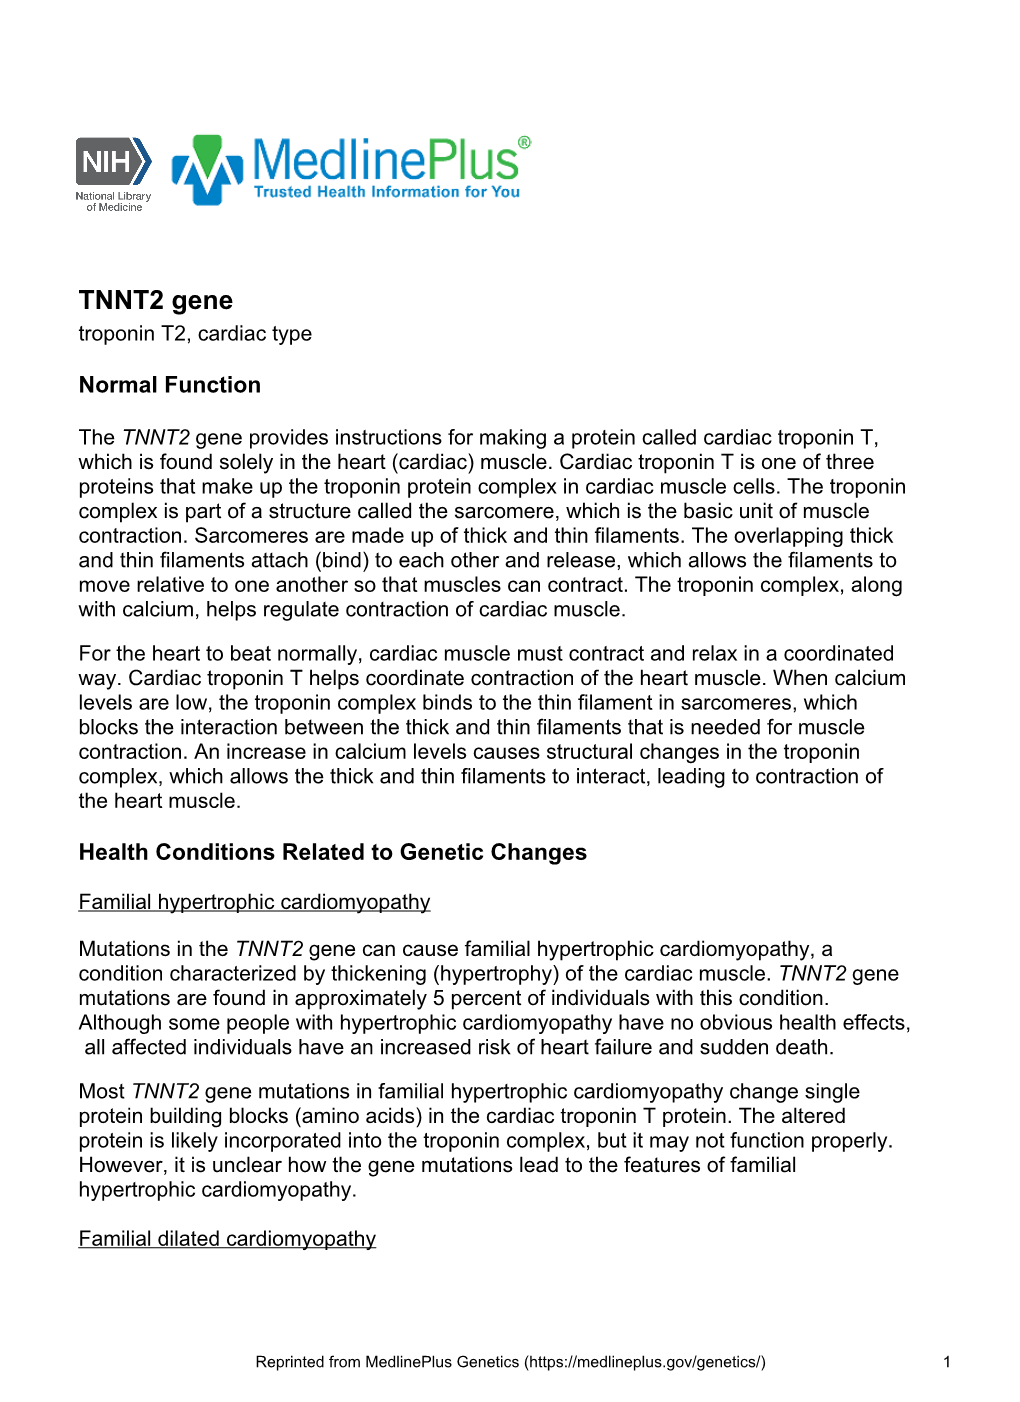 TNNT2 Gene Troponin T2, Cardiac Type